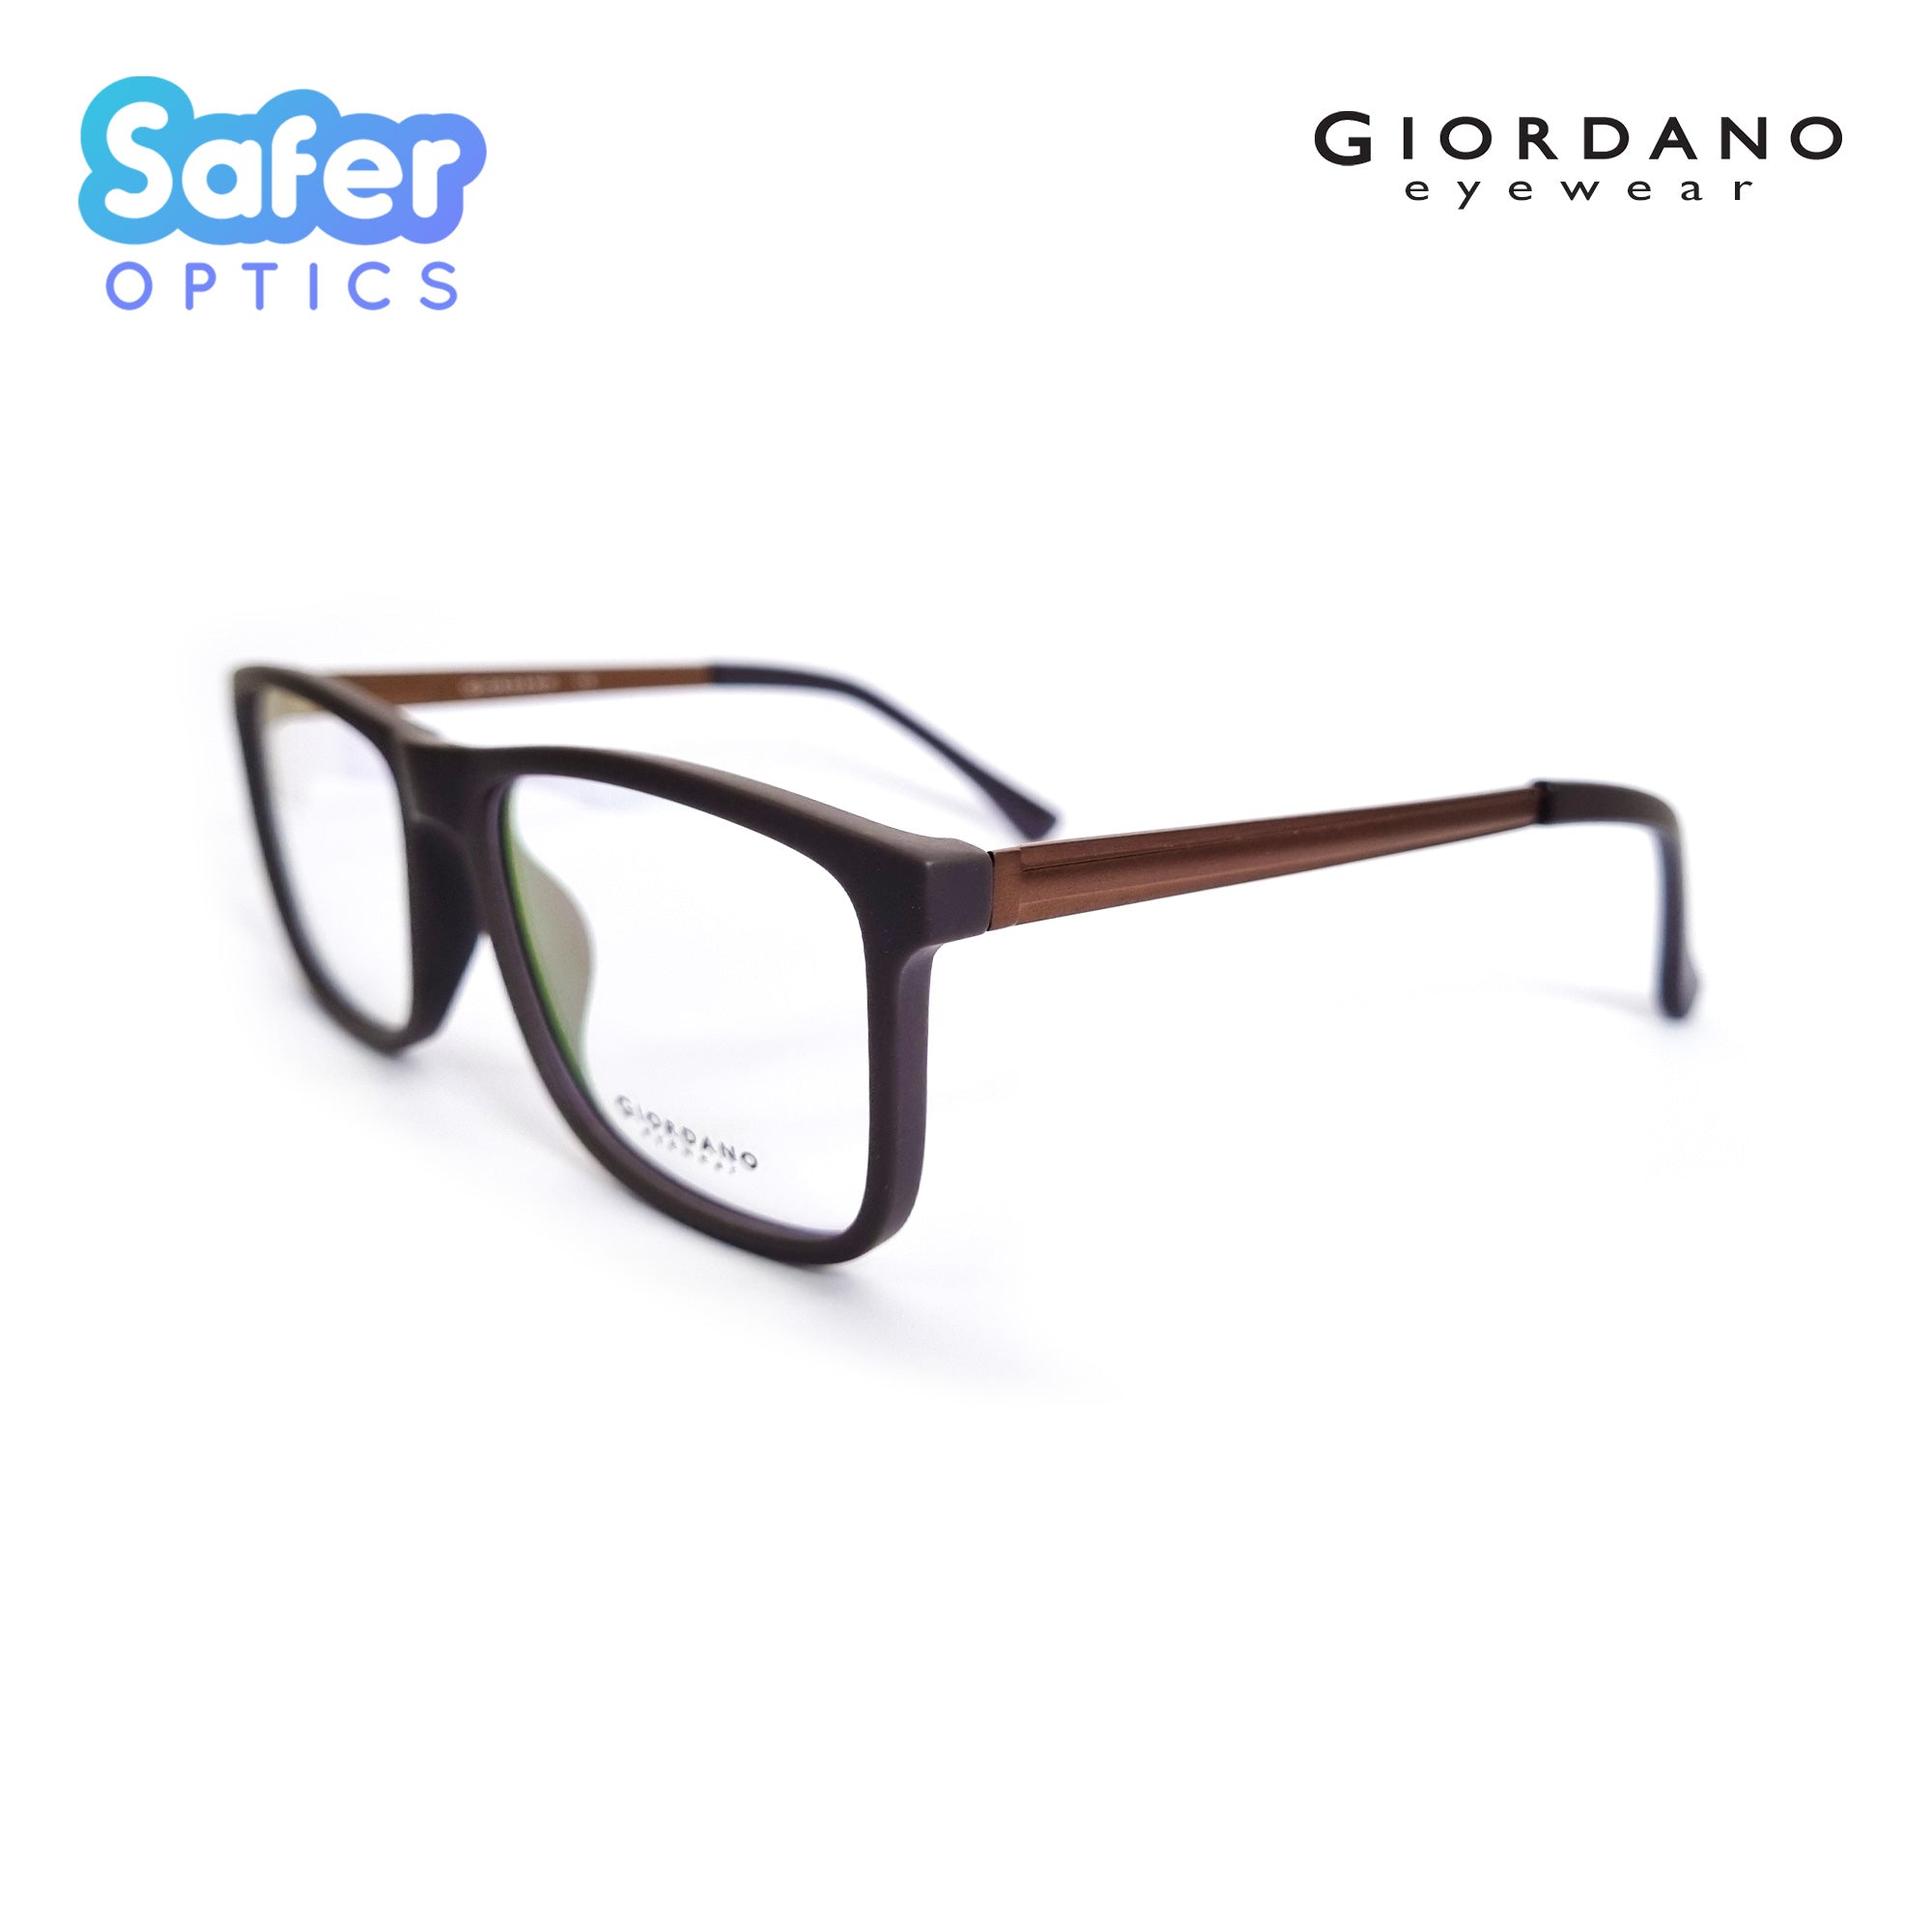 Giordano Eyewear - 969 (4 Colours) - SaferOptics Anti Blue Light Glasses Malaysia | Adult, Black, Customize, Giordano, hotdeals, Large, new